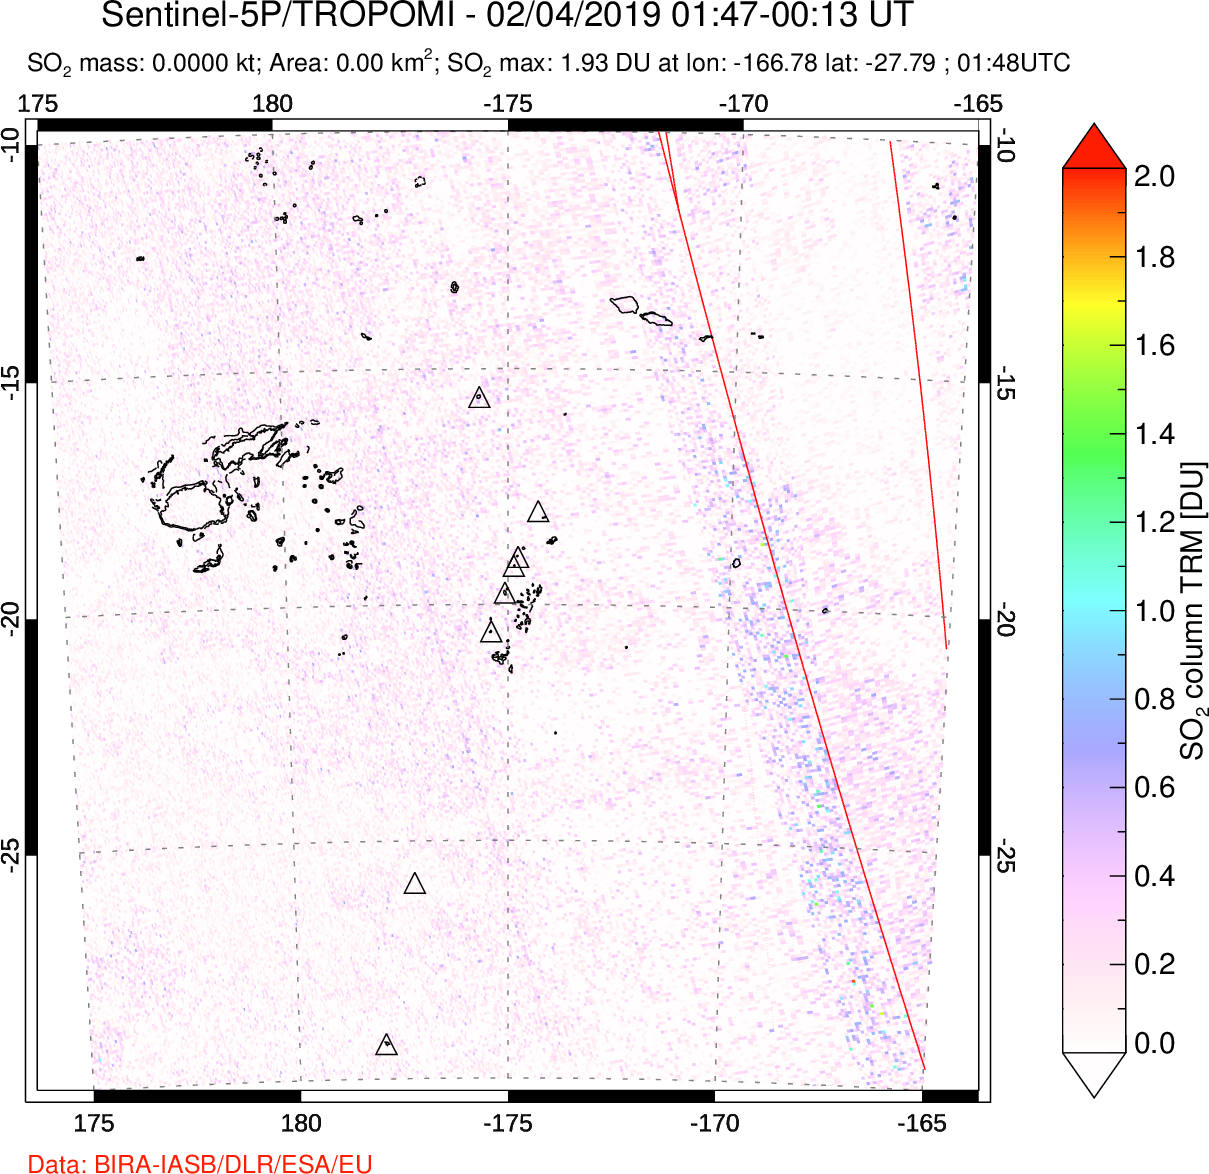 A sulfur dioxide image over Tonga, South Pacific on Feb 04, 2019.